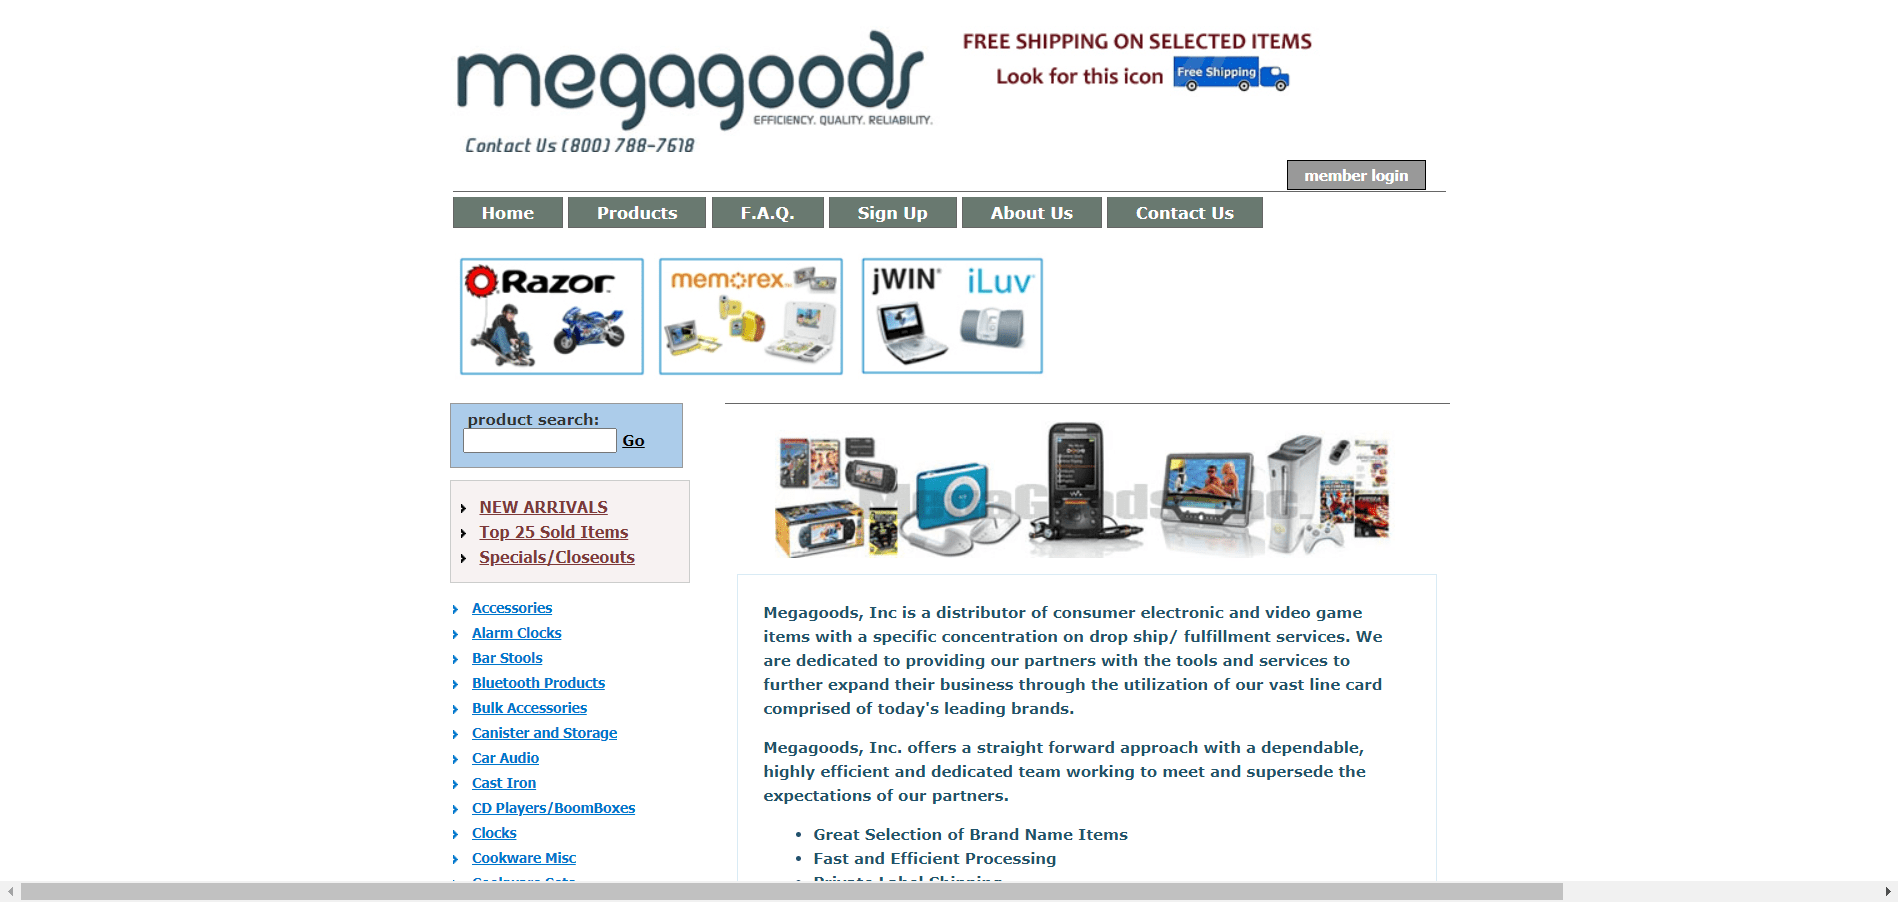 Megagoods.com